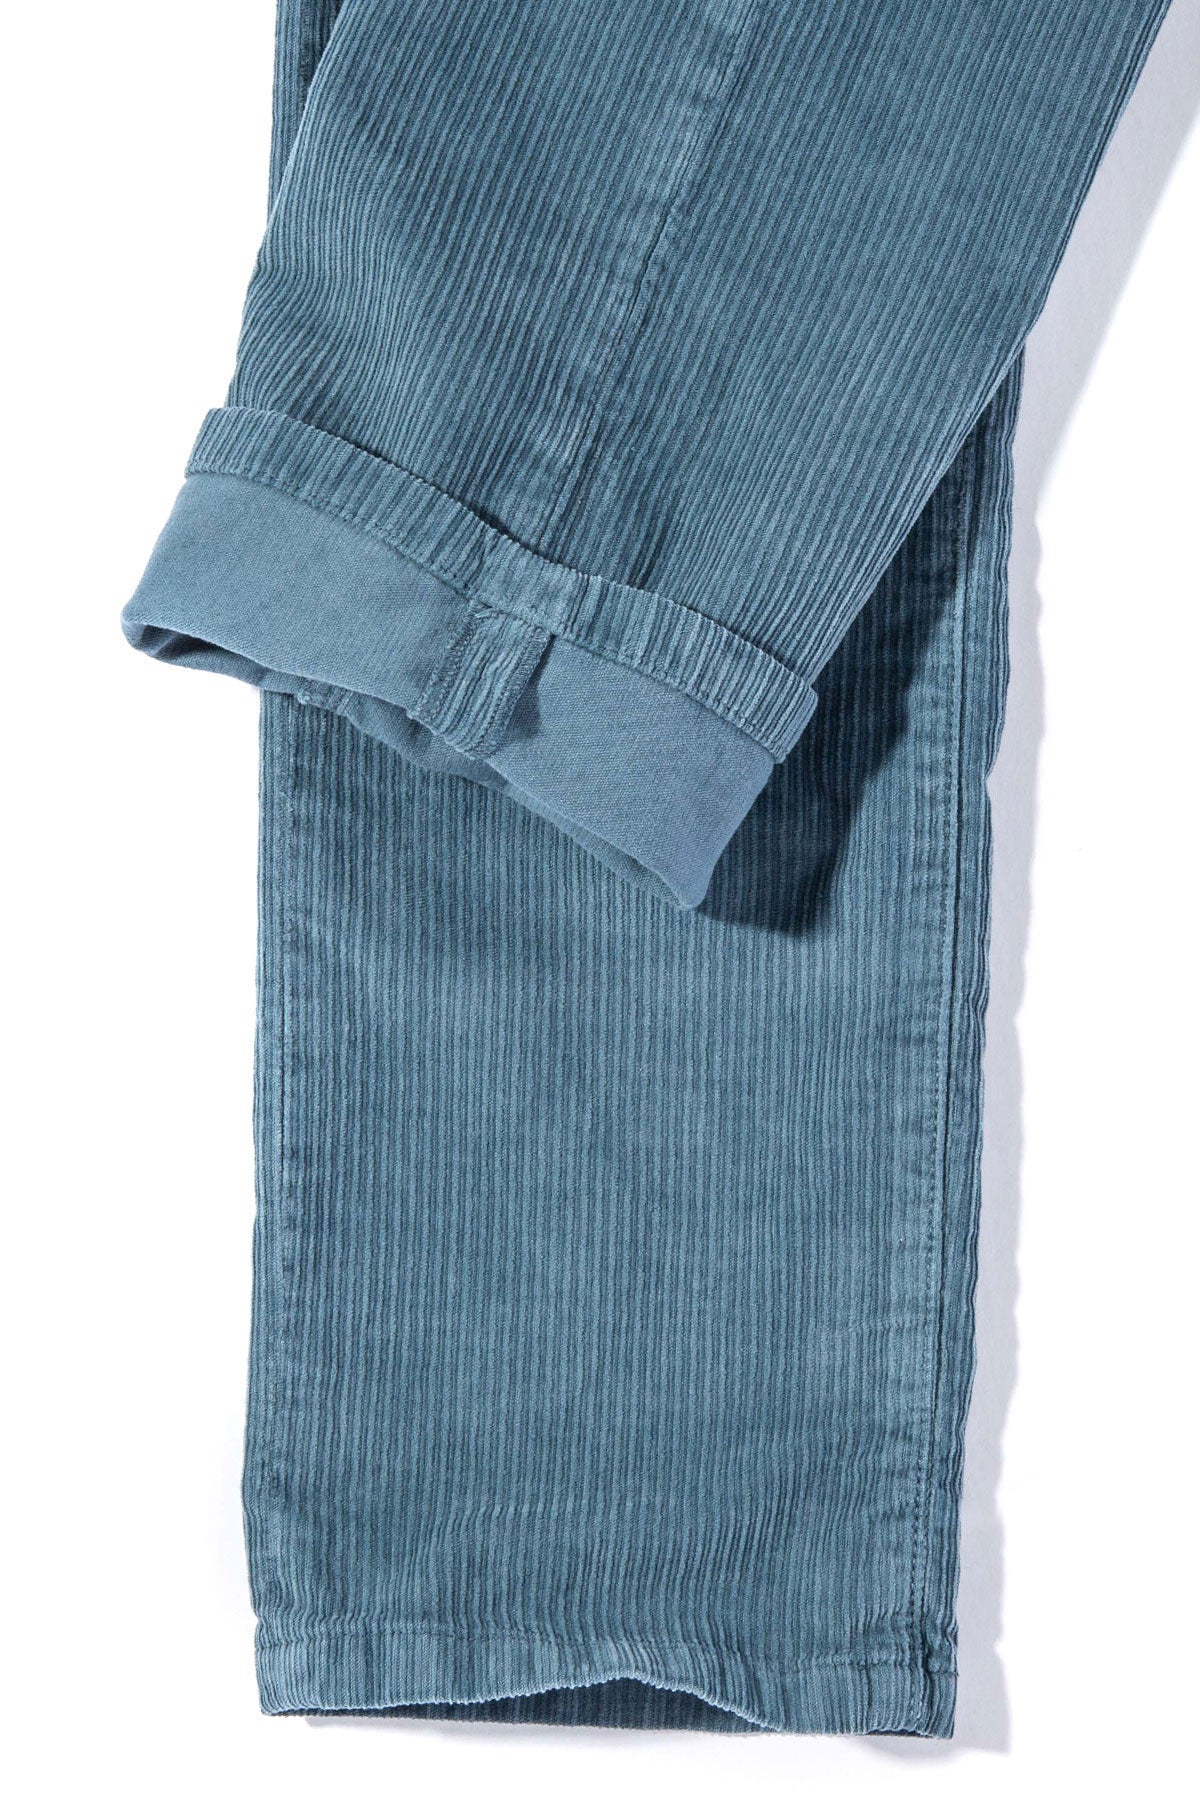 Payson Cord Pants in Niagra | Mens - Pants - 5 Pocket | Teleria Zed